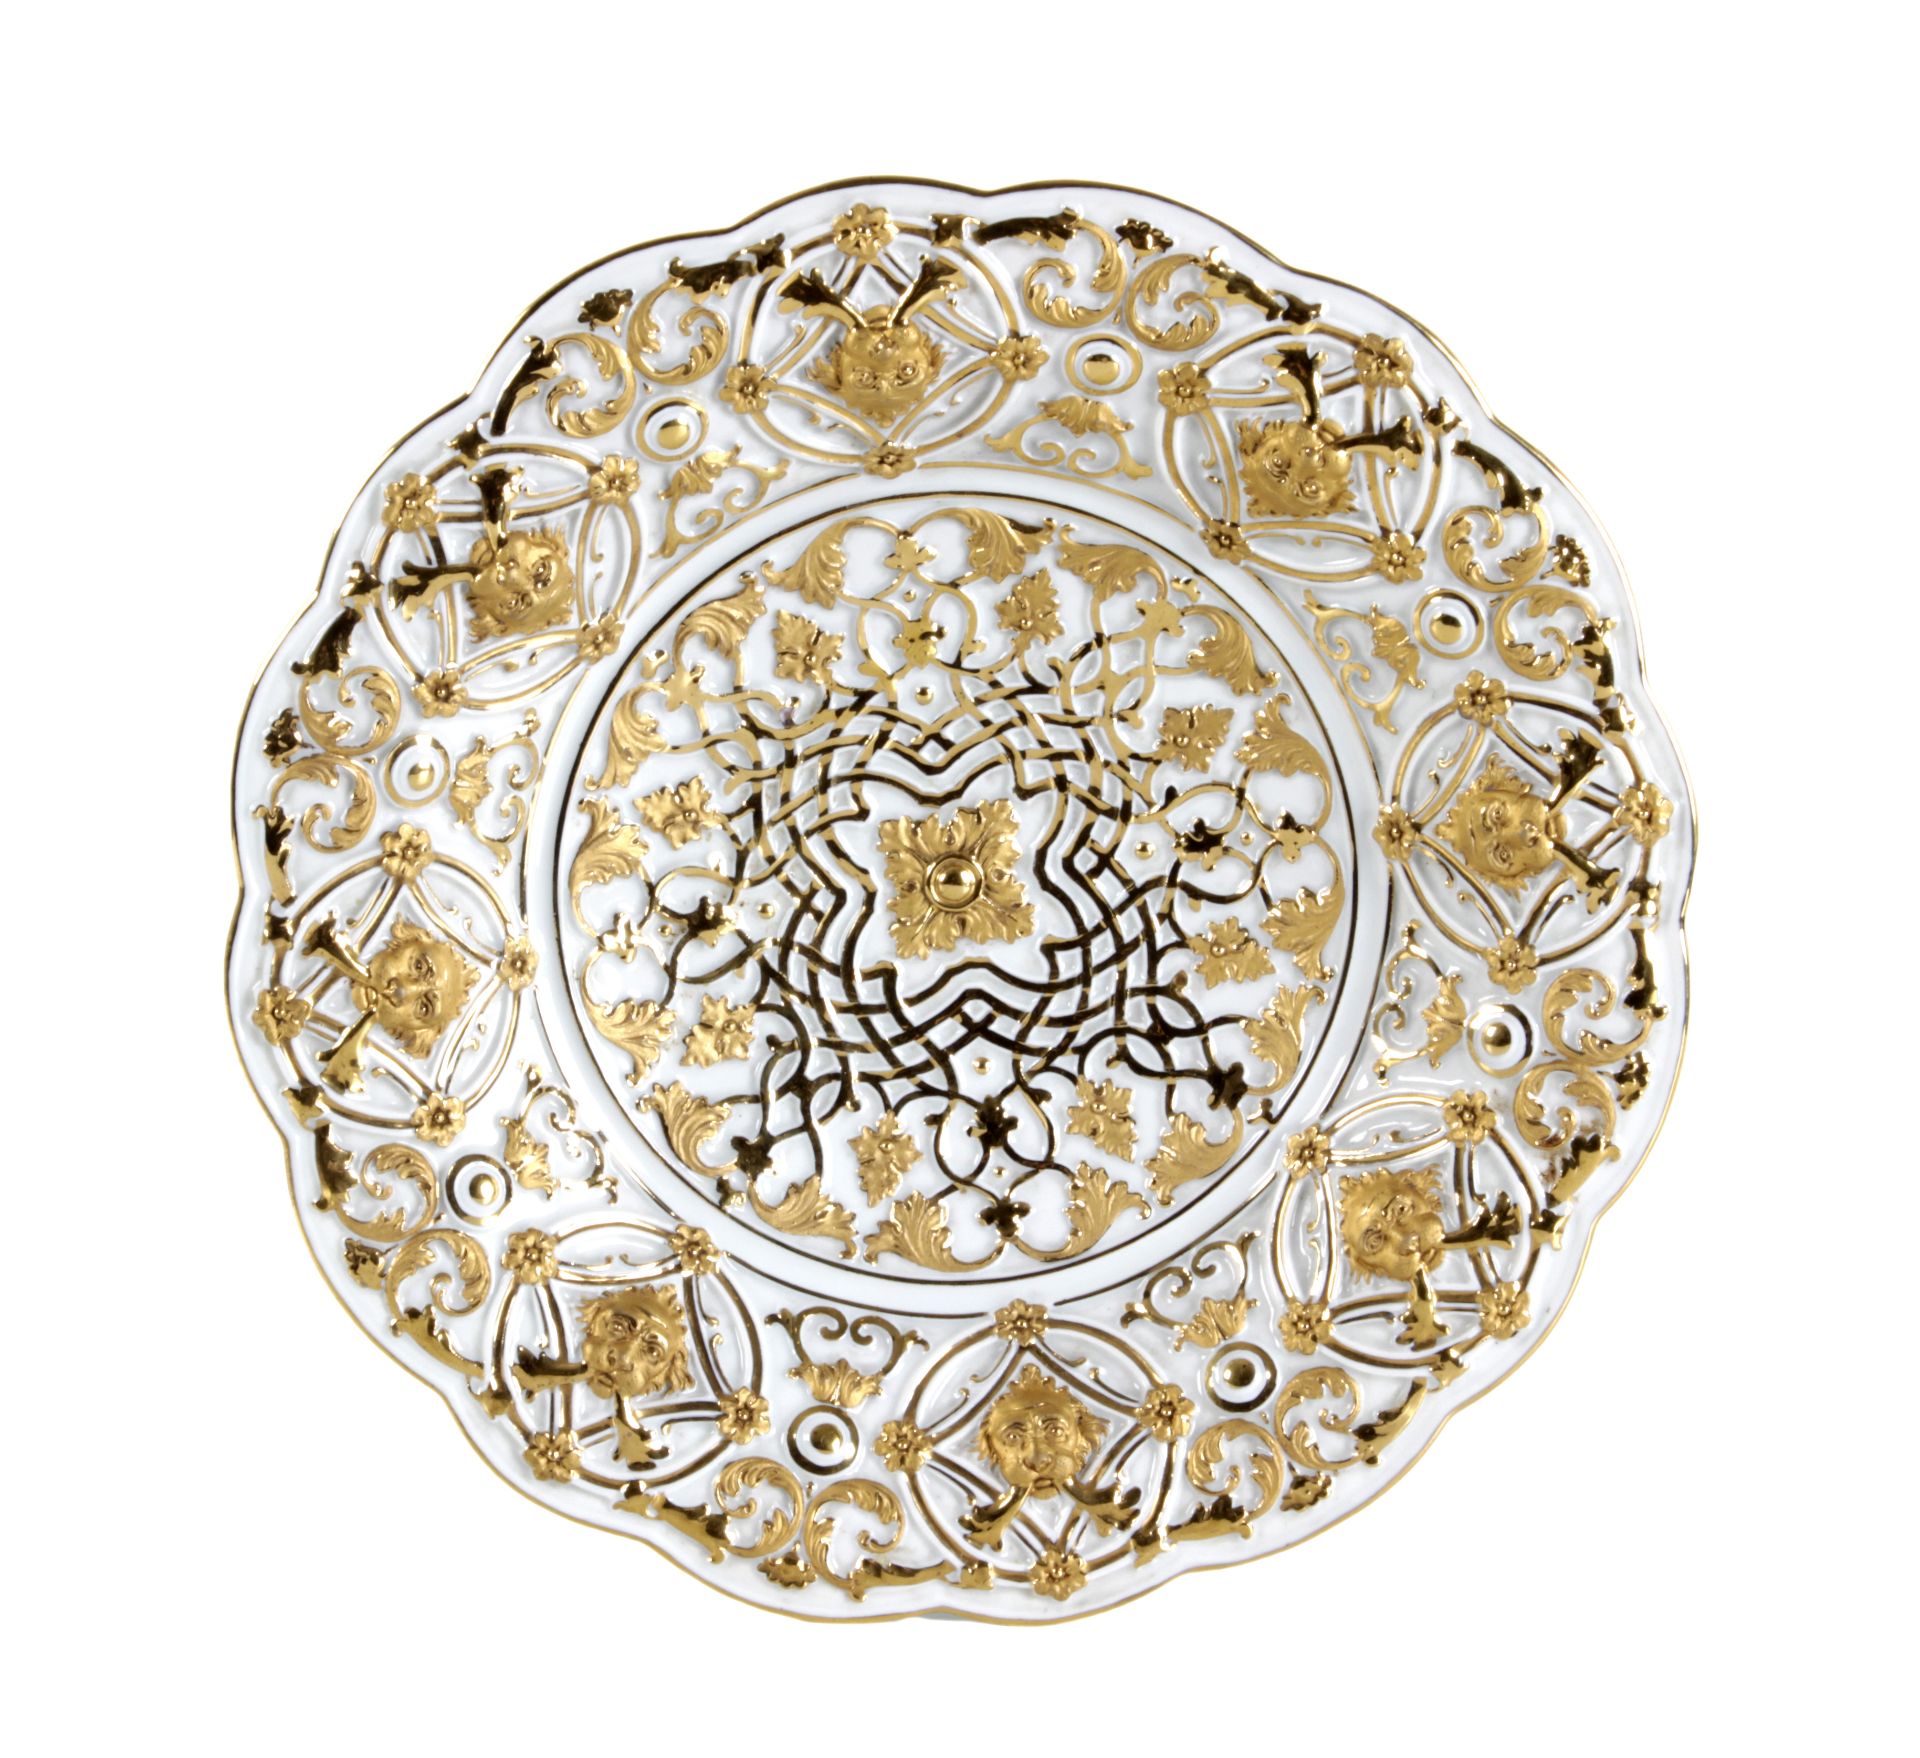 A 20th century German plate in Meissen porcelain